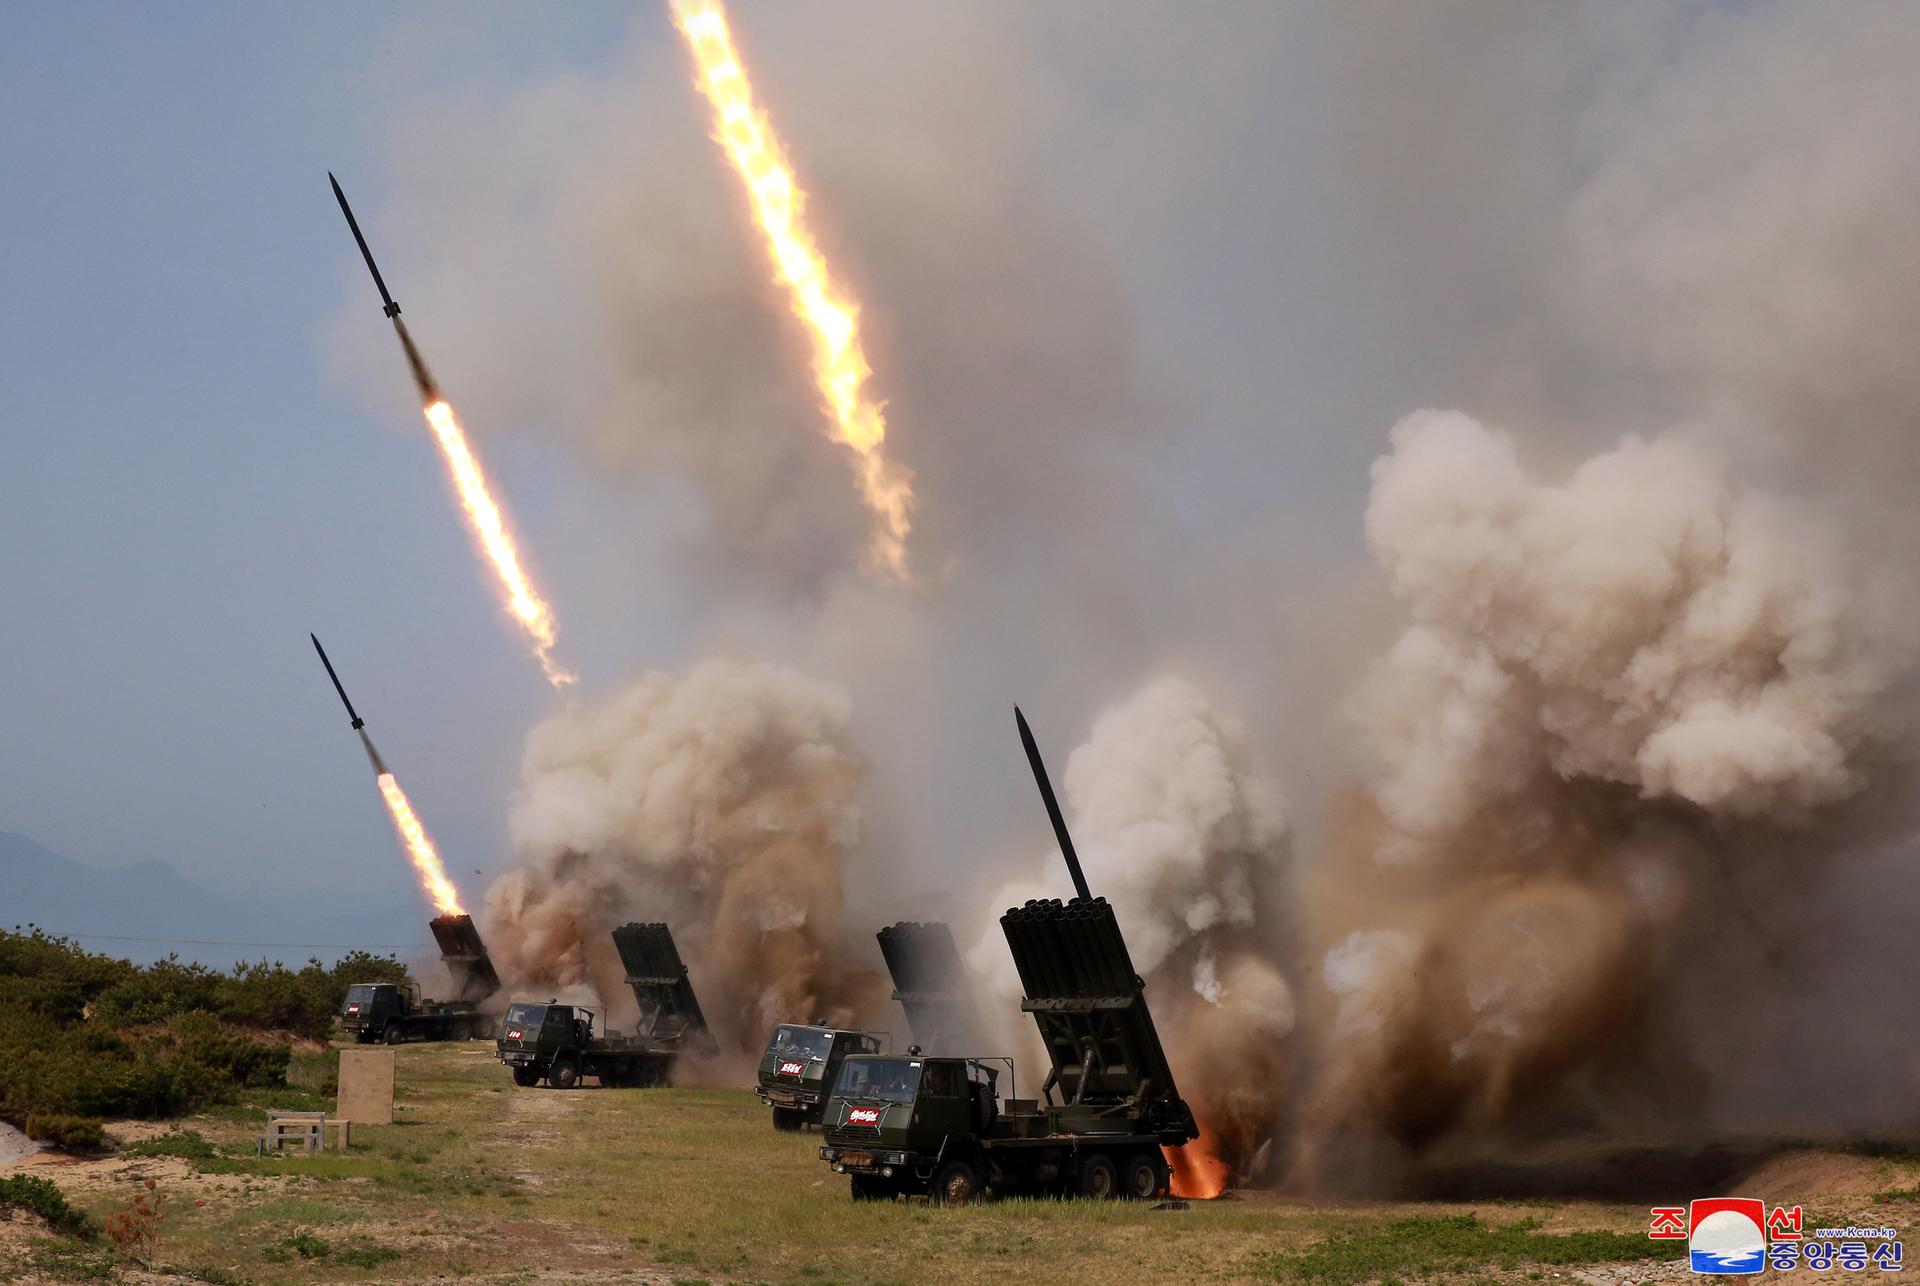 North Korean leader Kim oversaw testing of multiple rocket launchers: KCNA